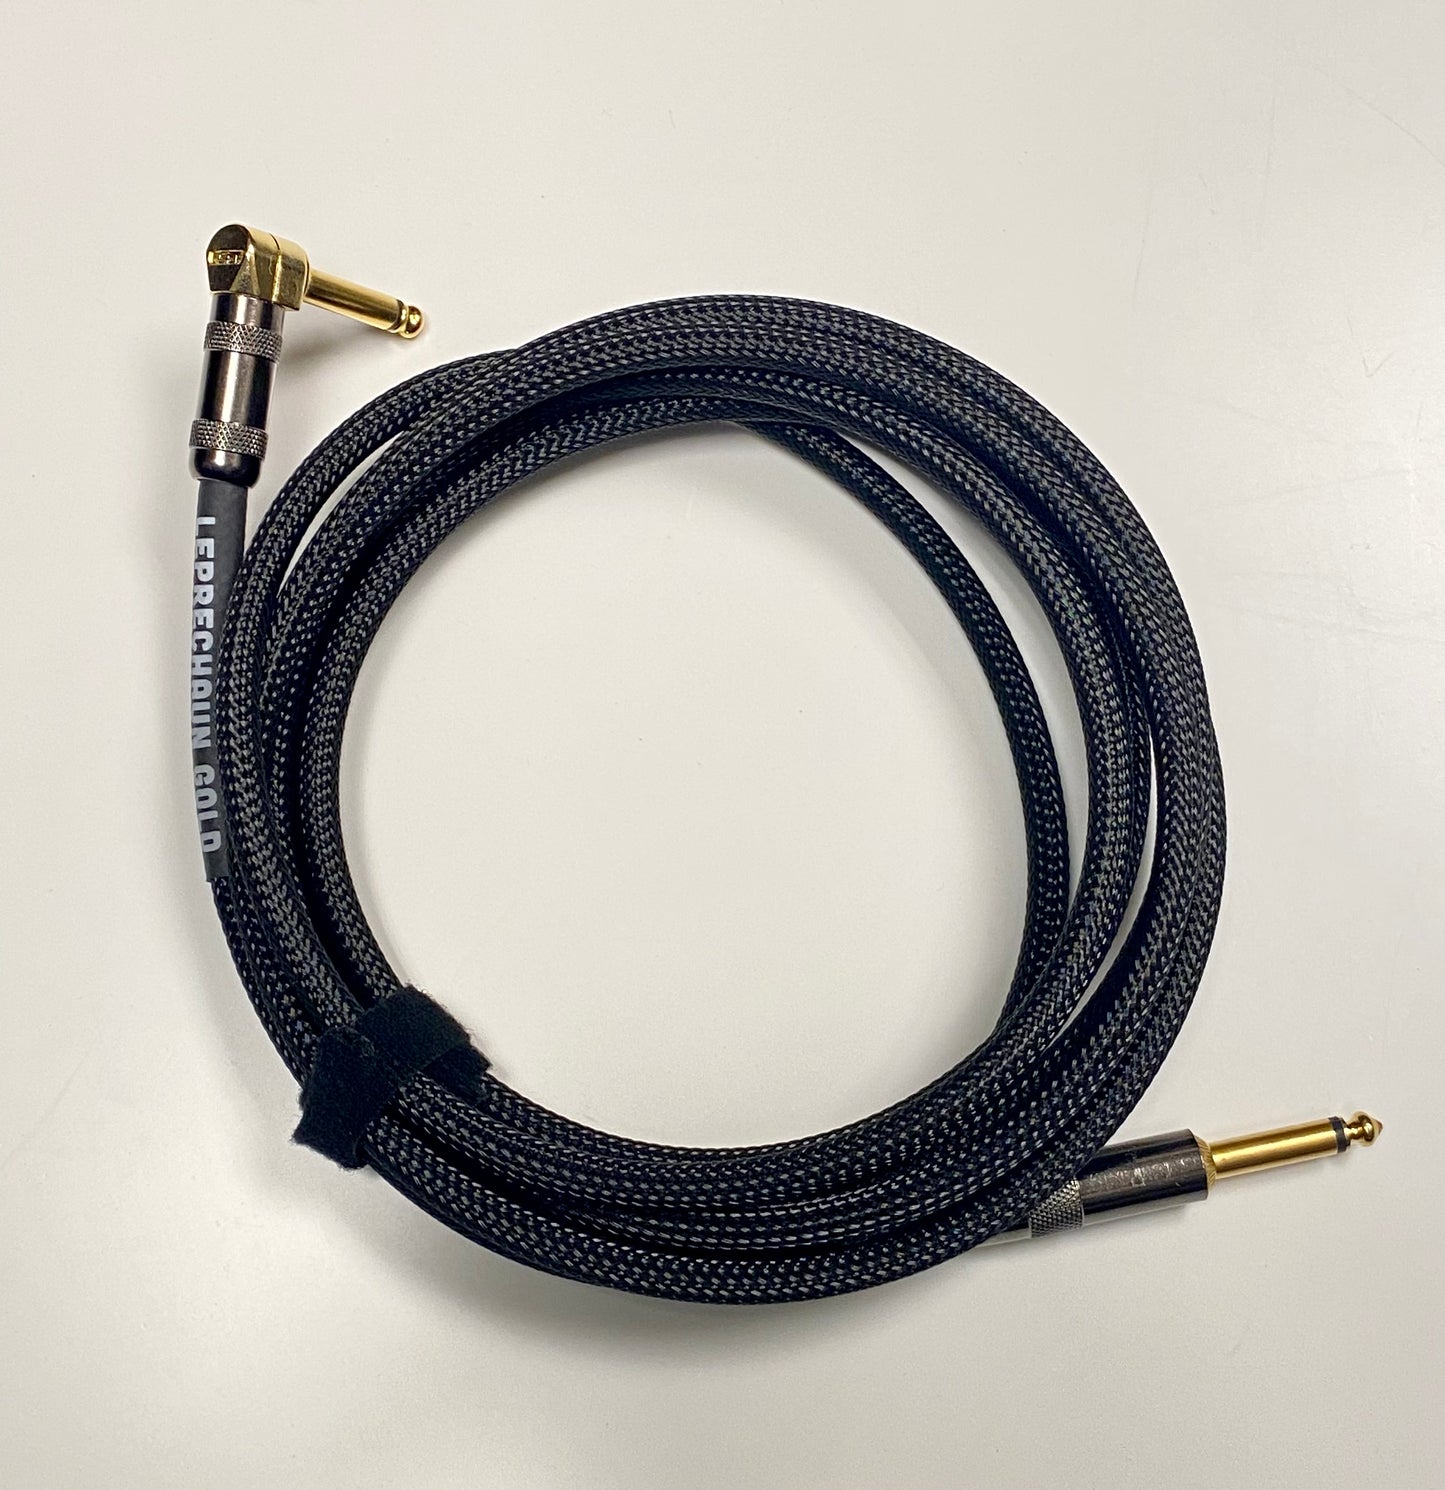 Leprechaun Gold Instrument Cable (Blackest Black)